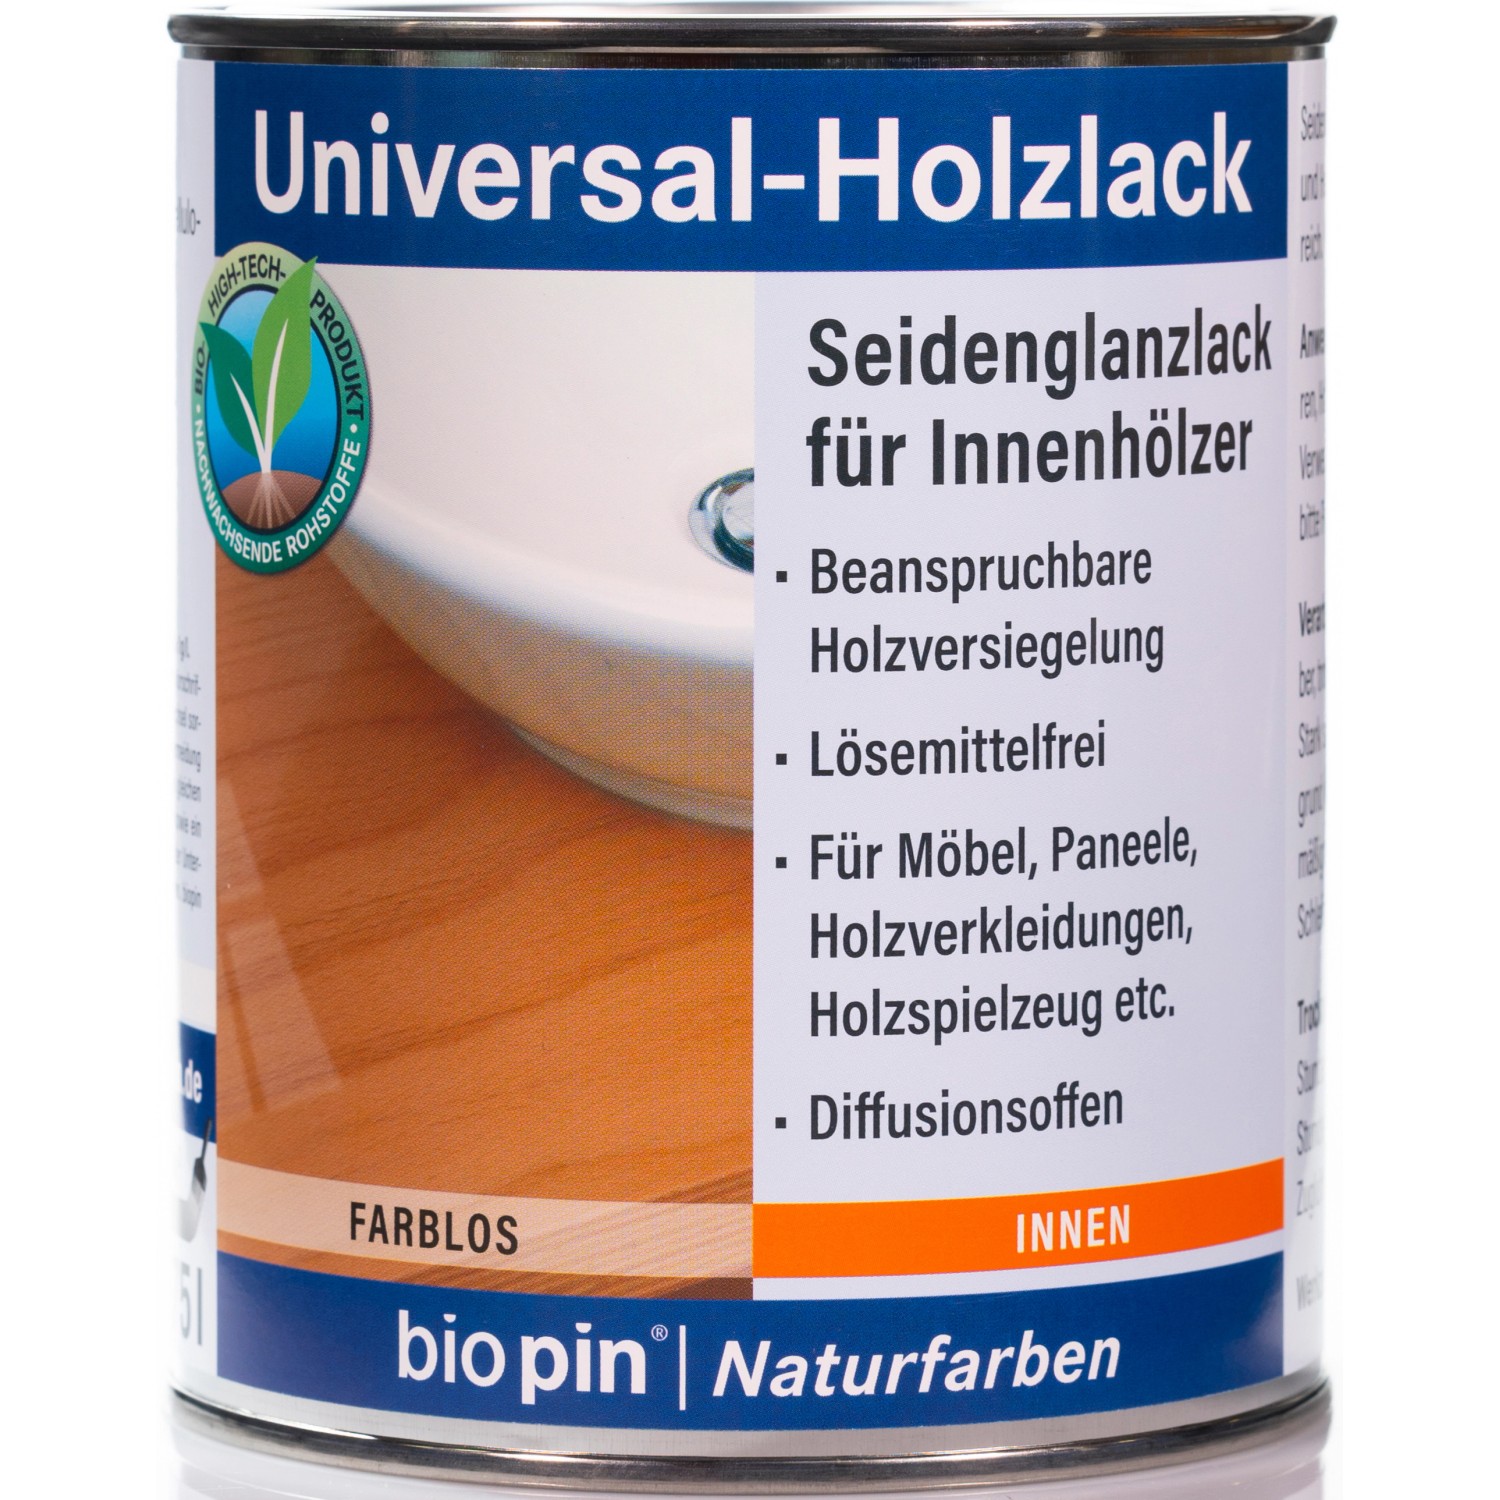 biopin Universal Holzlack farblos 0,75 l